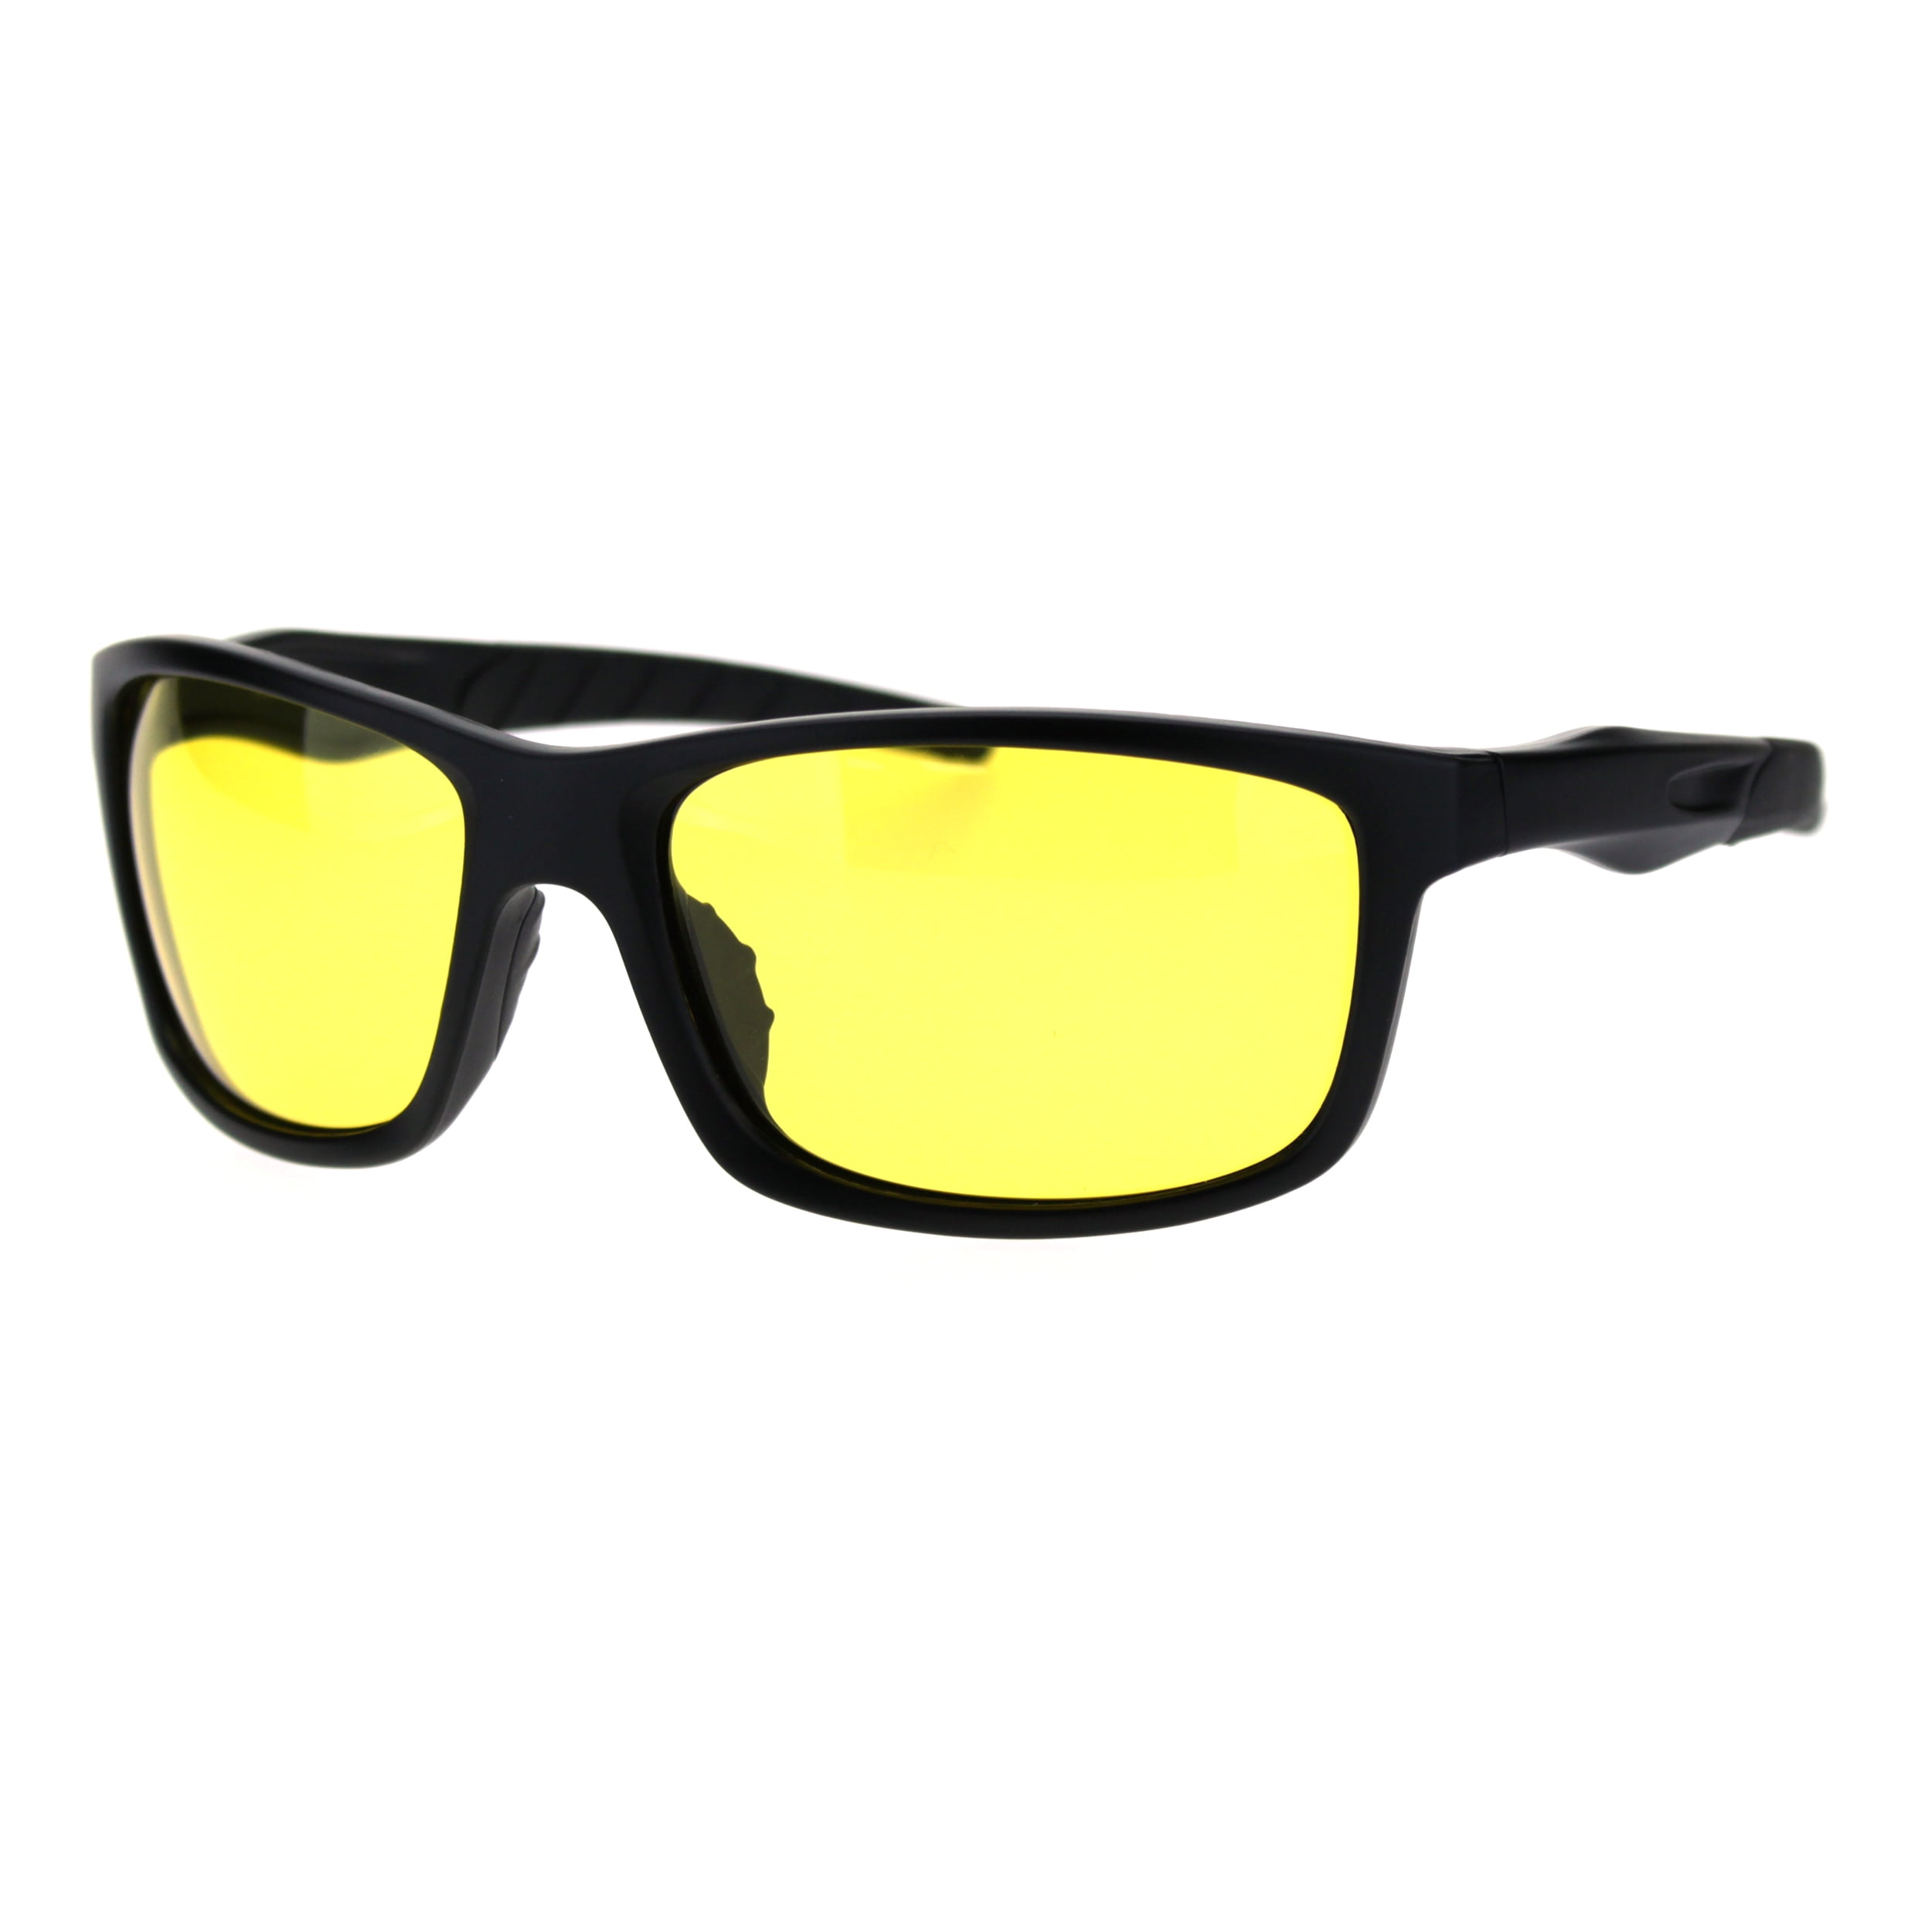 Polarized Yellow Lens Sunglasses Horn Rim Style Anti Glare Night Vision Driving 